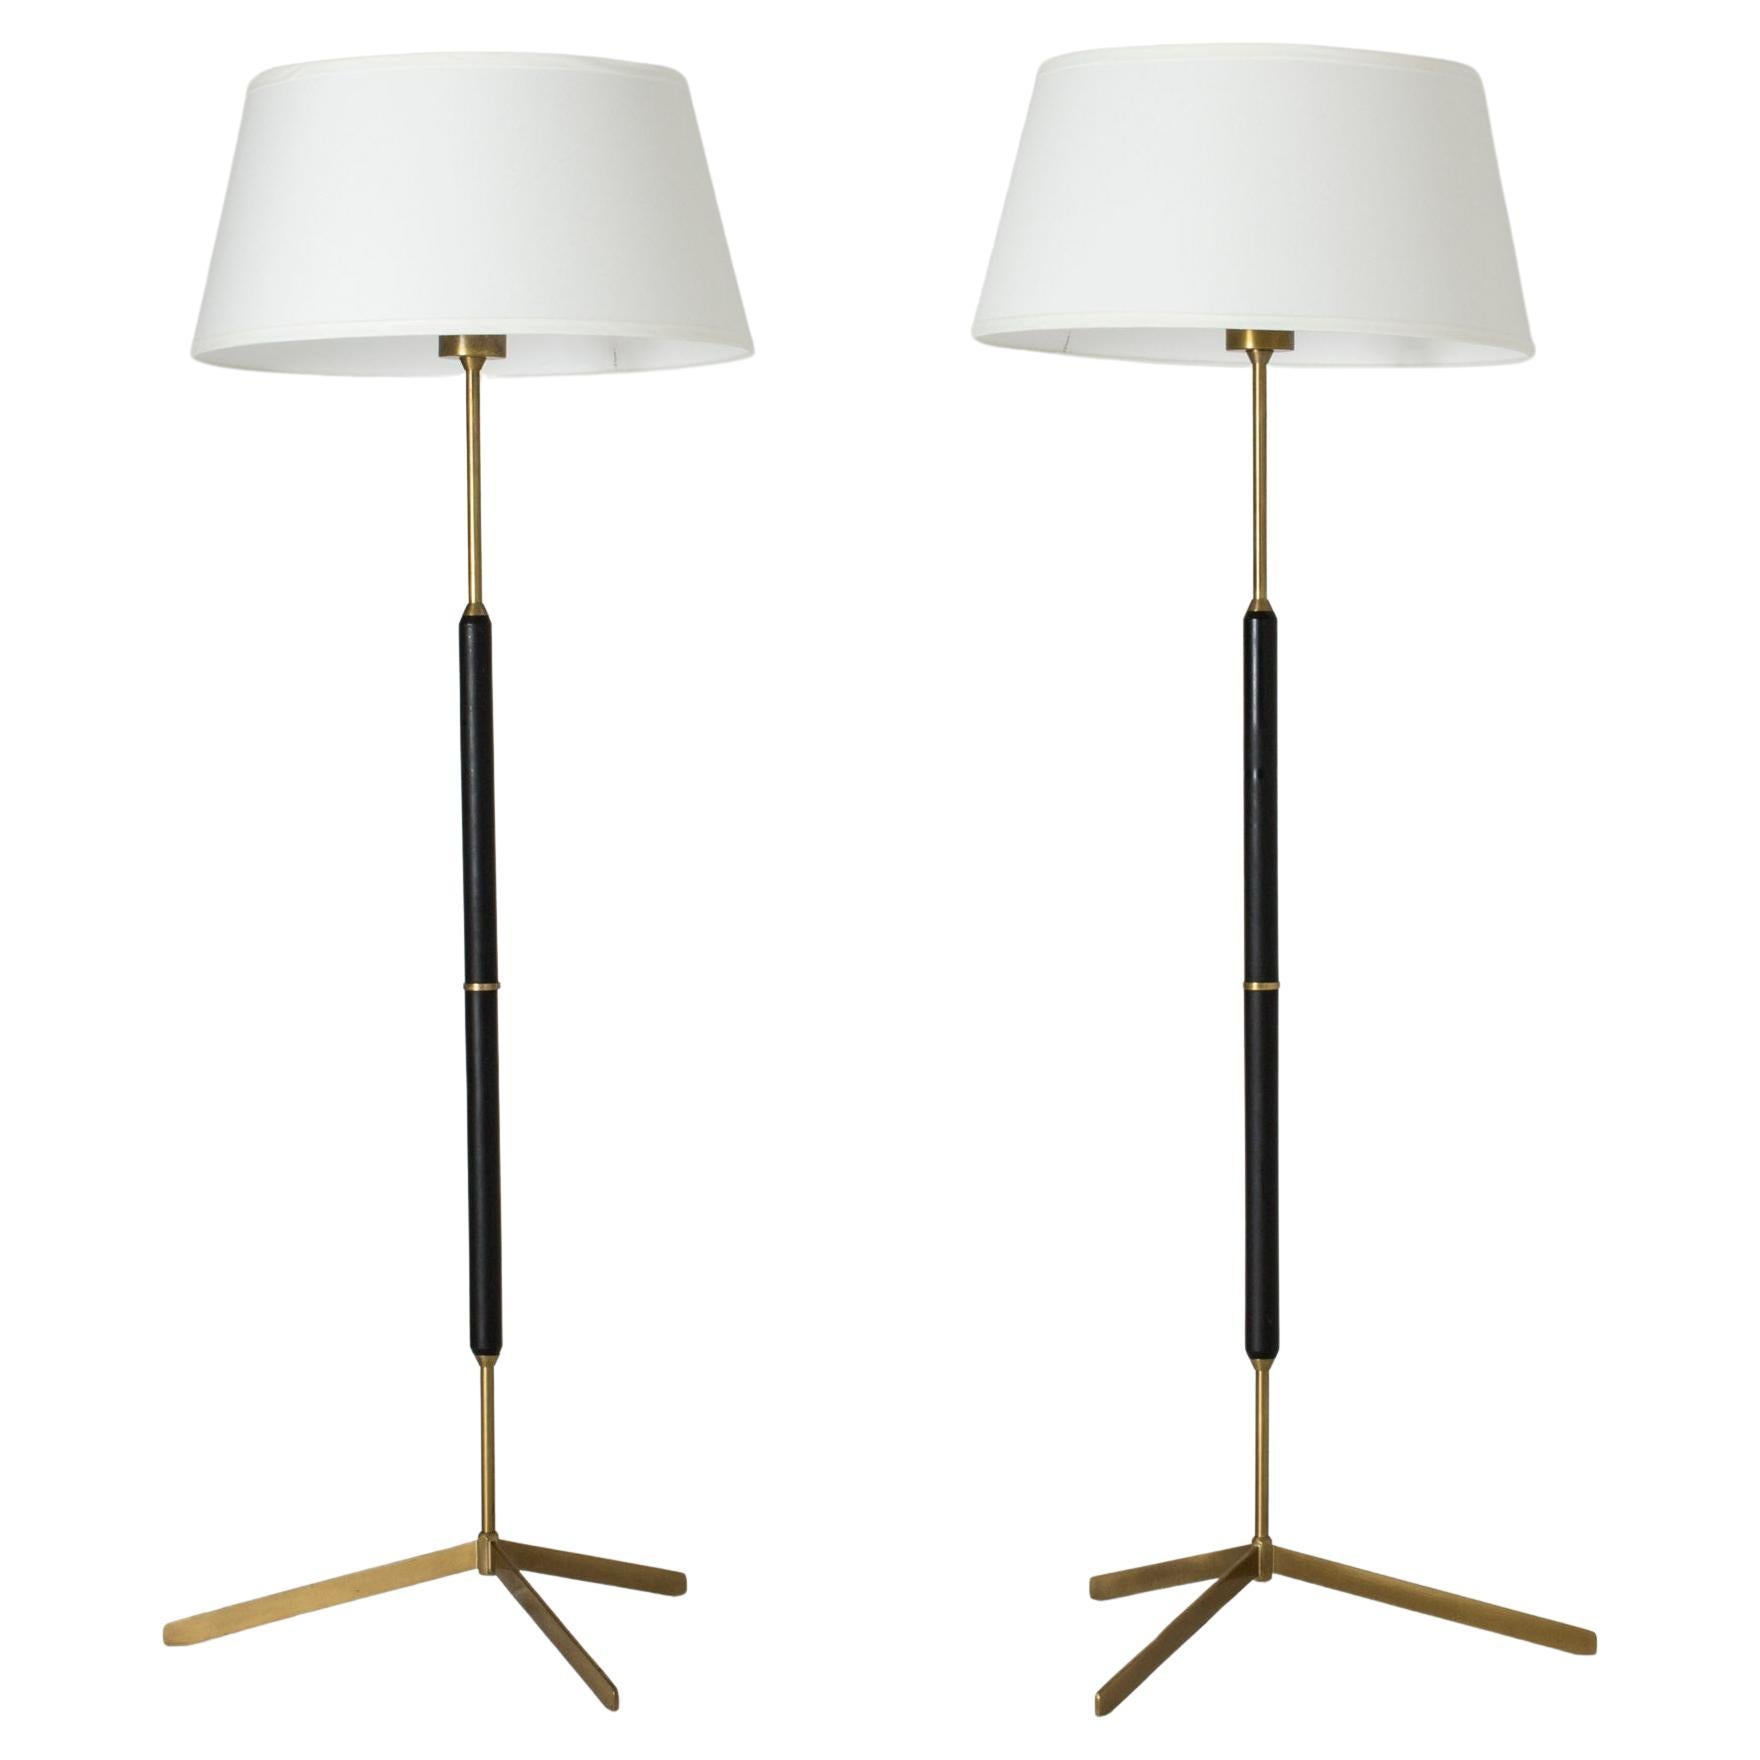 G 31 model floor lamps by Bergboms, Sweden For Sale